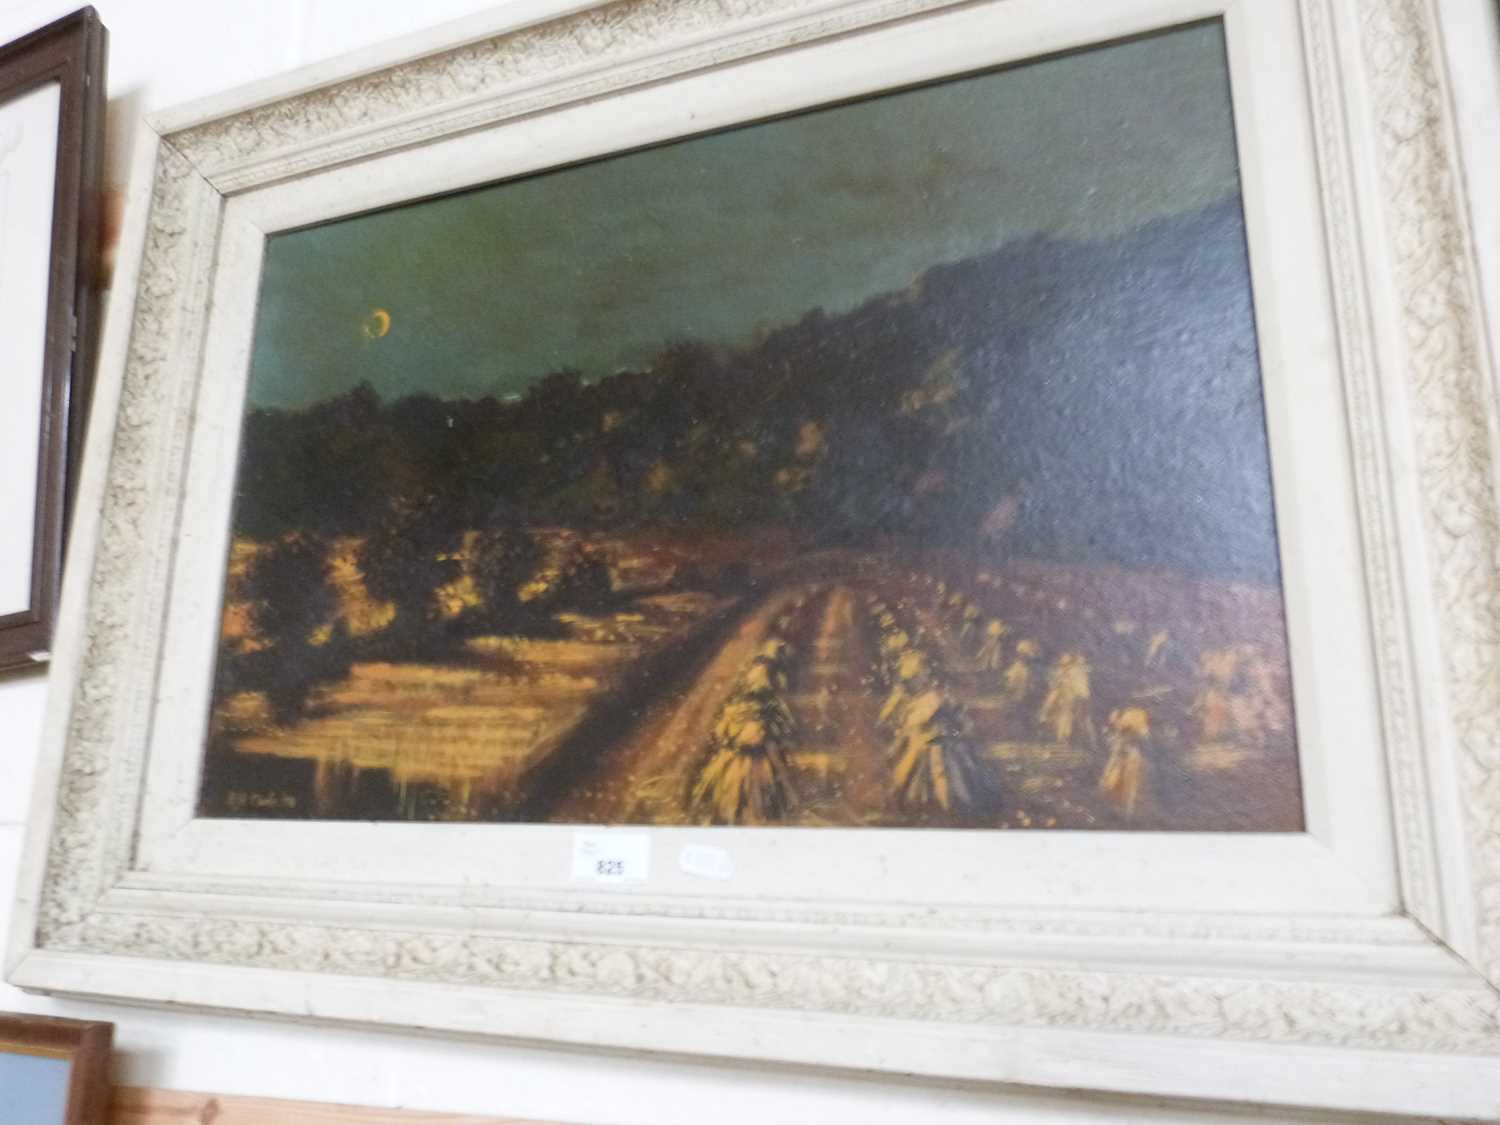 B J R Clarke, study of a harvest scene, oil on board, framed